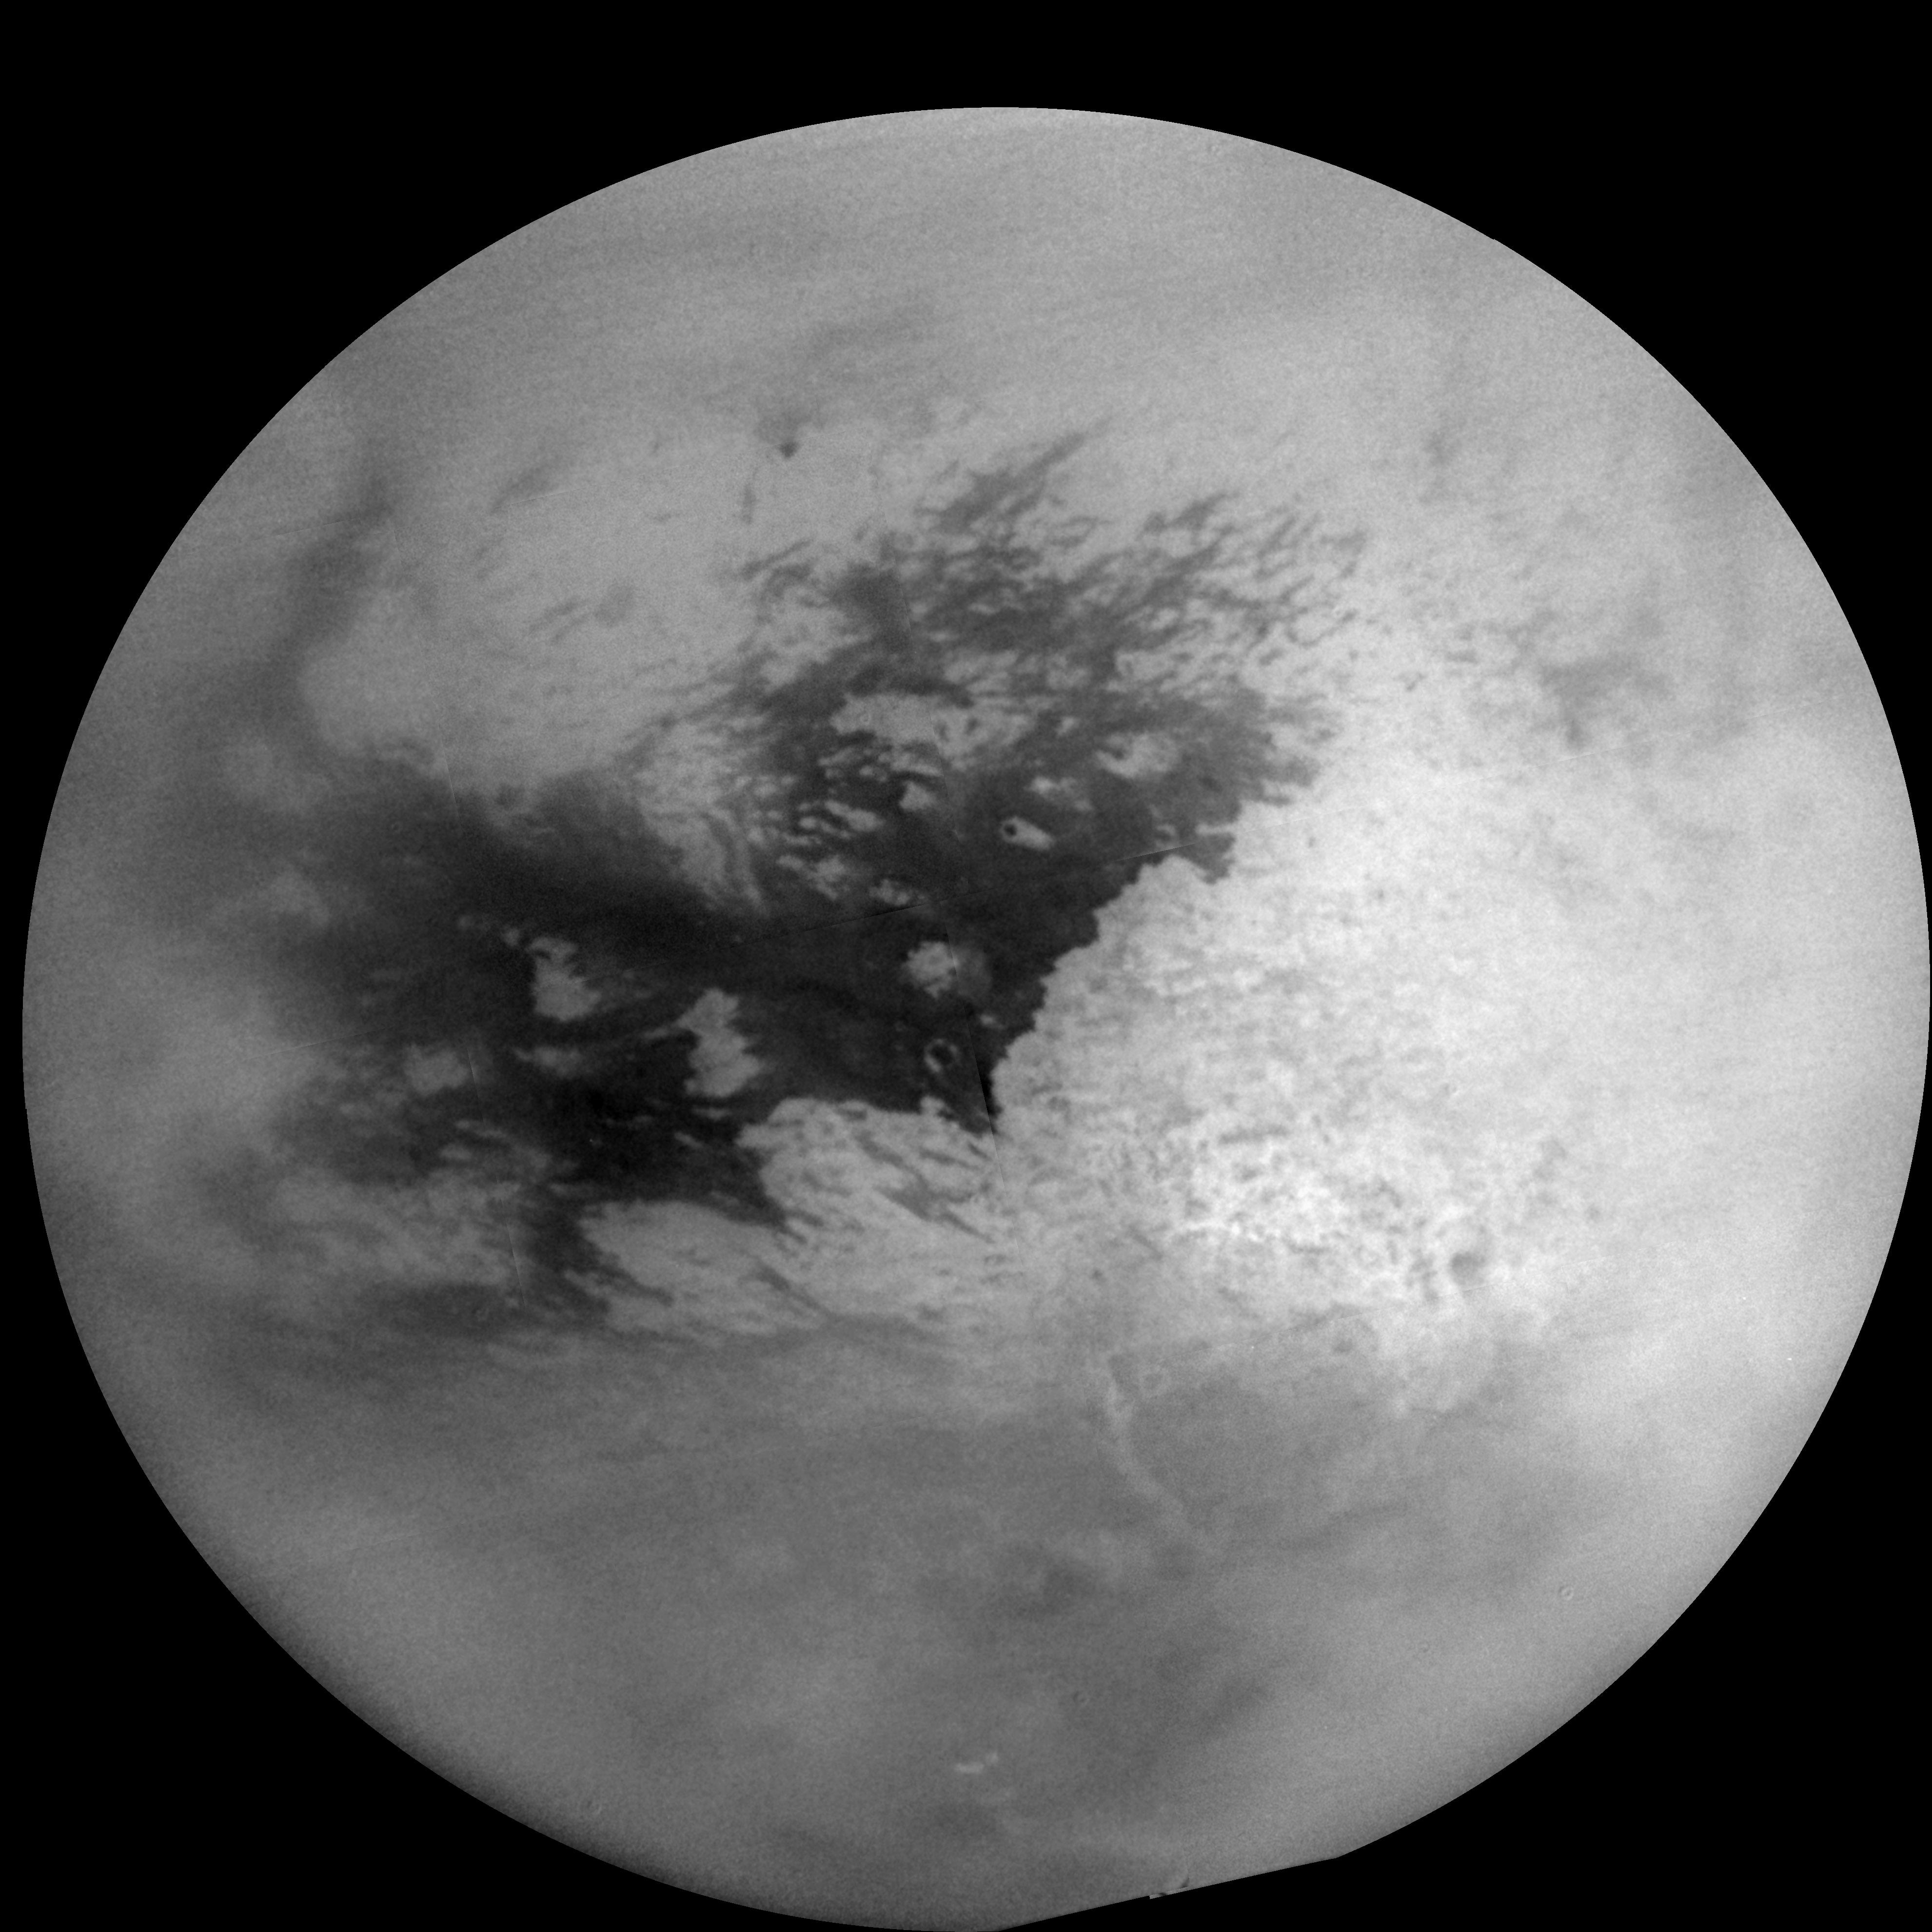 Mosaic of Titan's surface